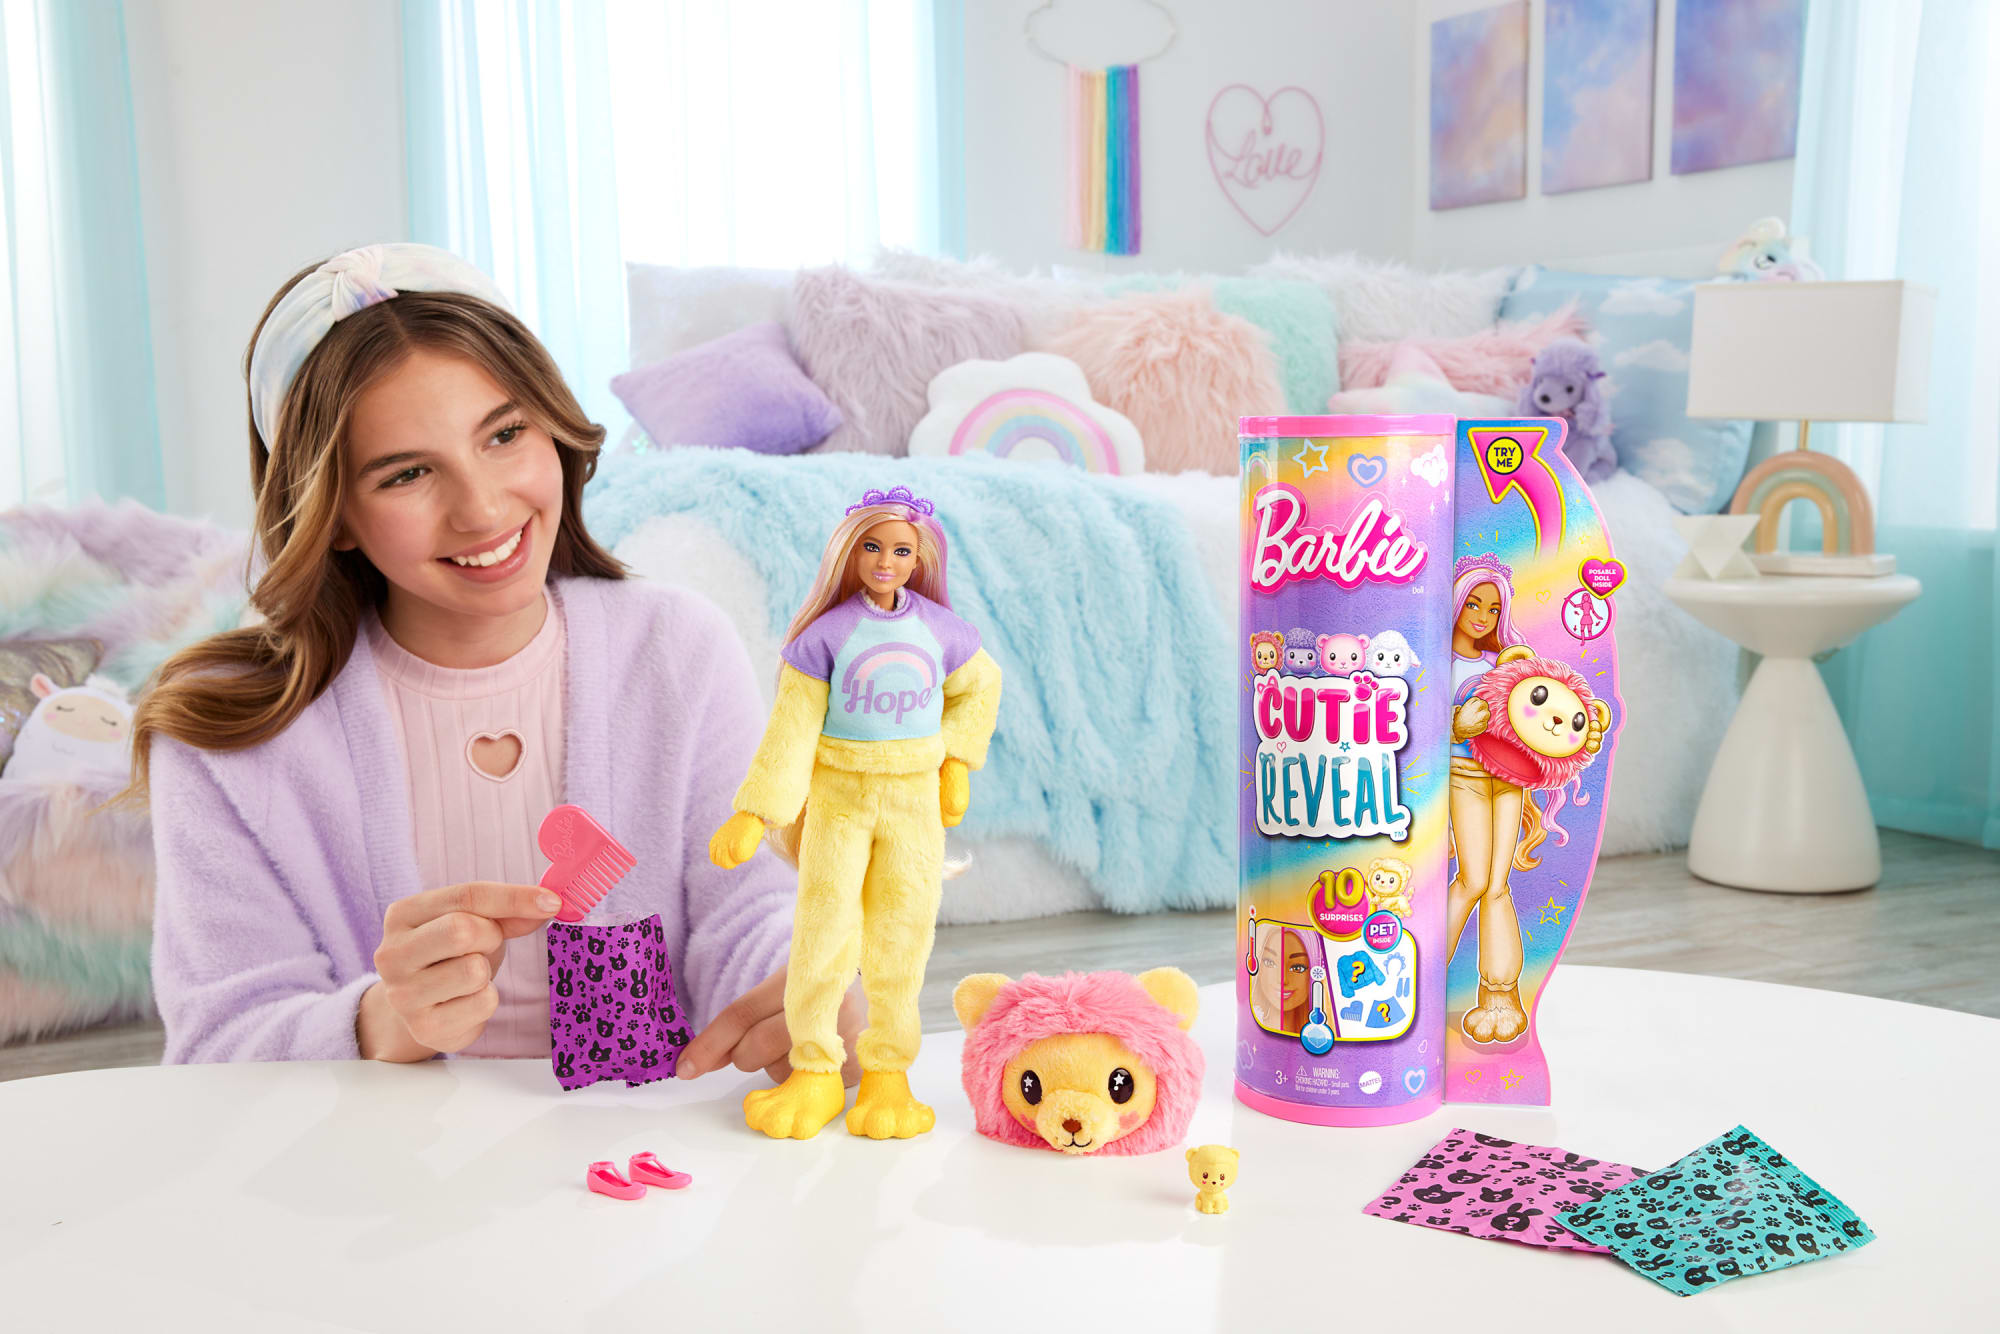  Barbie Cutie Reveal Doll & Accessories, Lamb Plush Costume & 10  Surprises Including Color Change, “Dream” Cozy Cute Tees : Everything Else